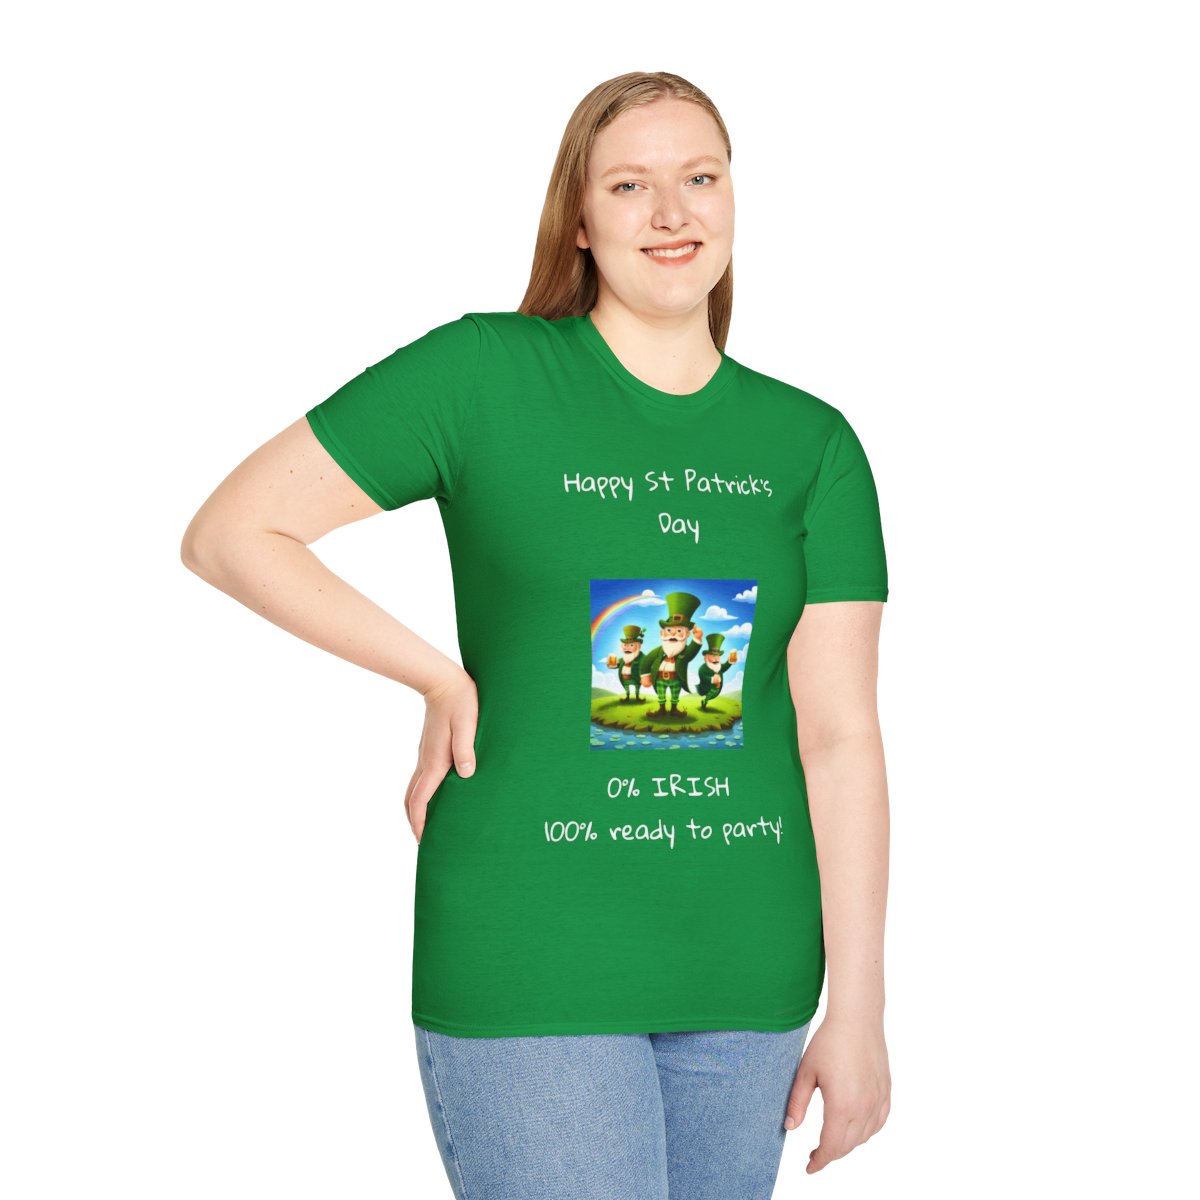 Happy St Patrick's Day, 0% Irish Celebration Tee!  - T-Shirt product thumbnail image